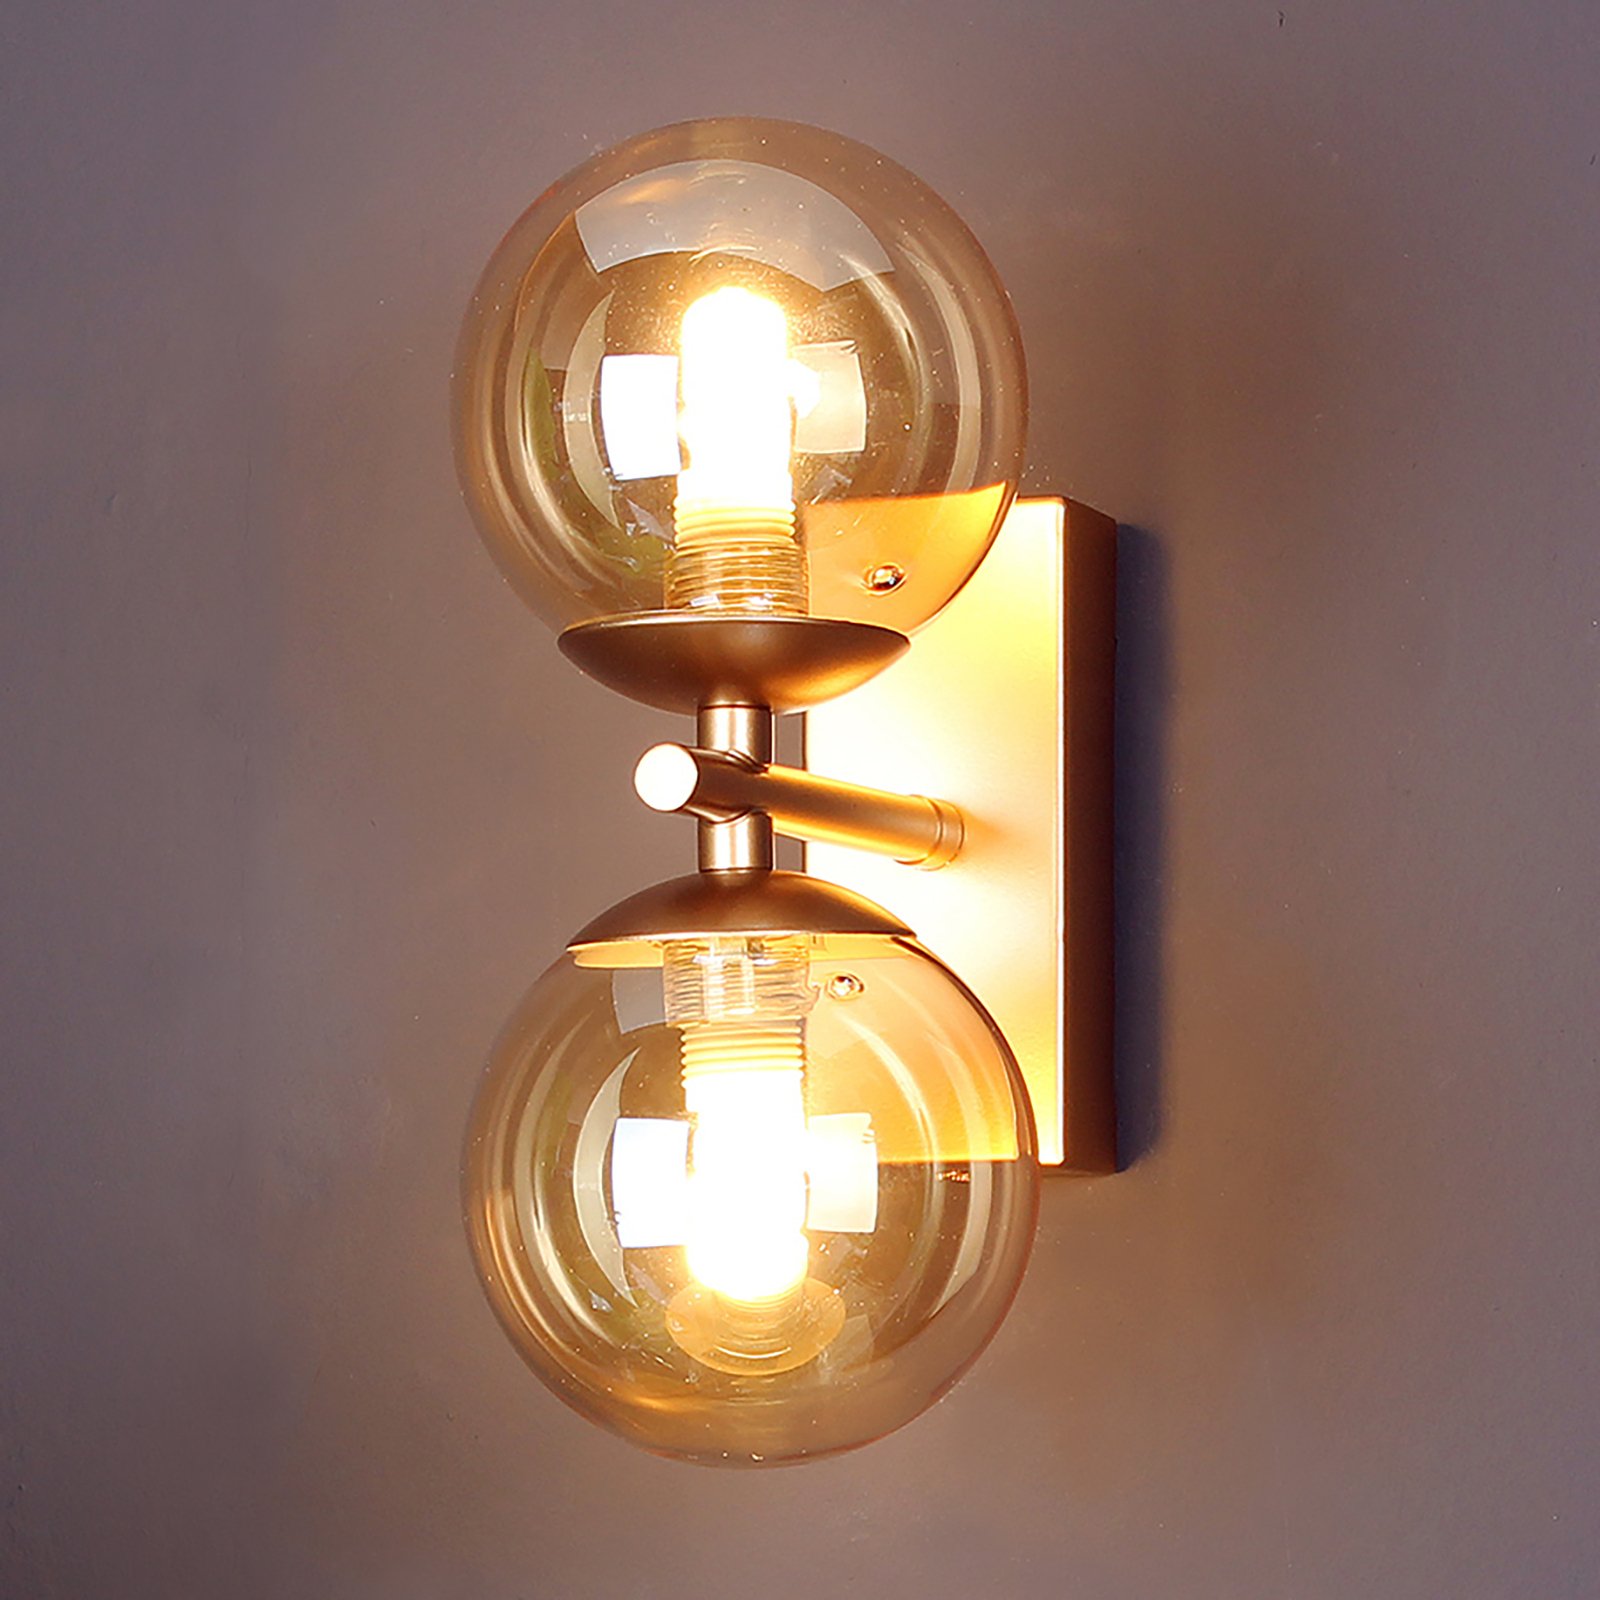 Neptune wall light 2-bulb gold glass globes